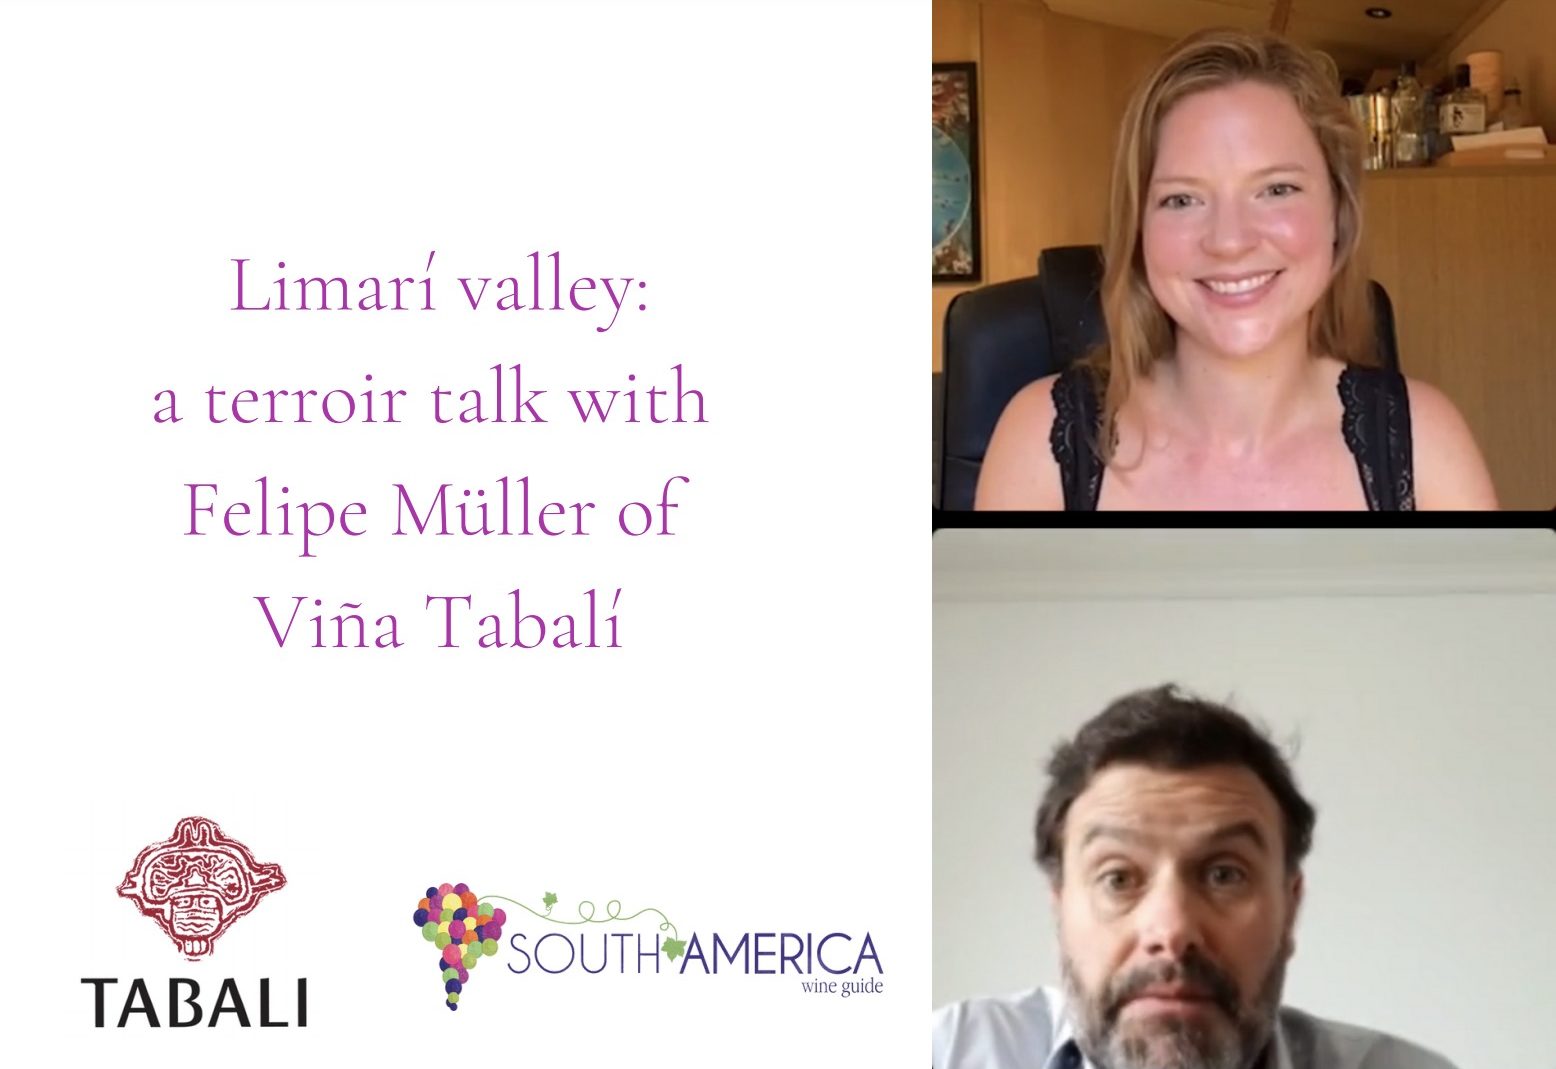 Interview with Felipe Muller, winemaker Vina Tabali of Limari